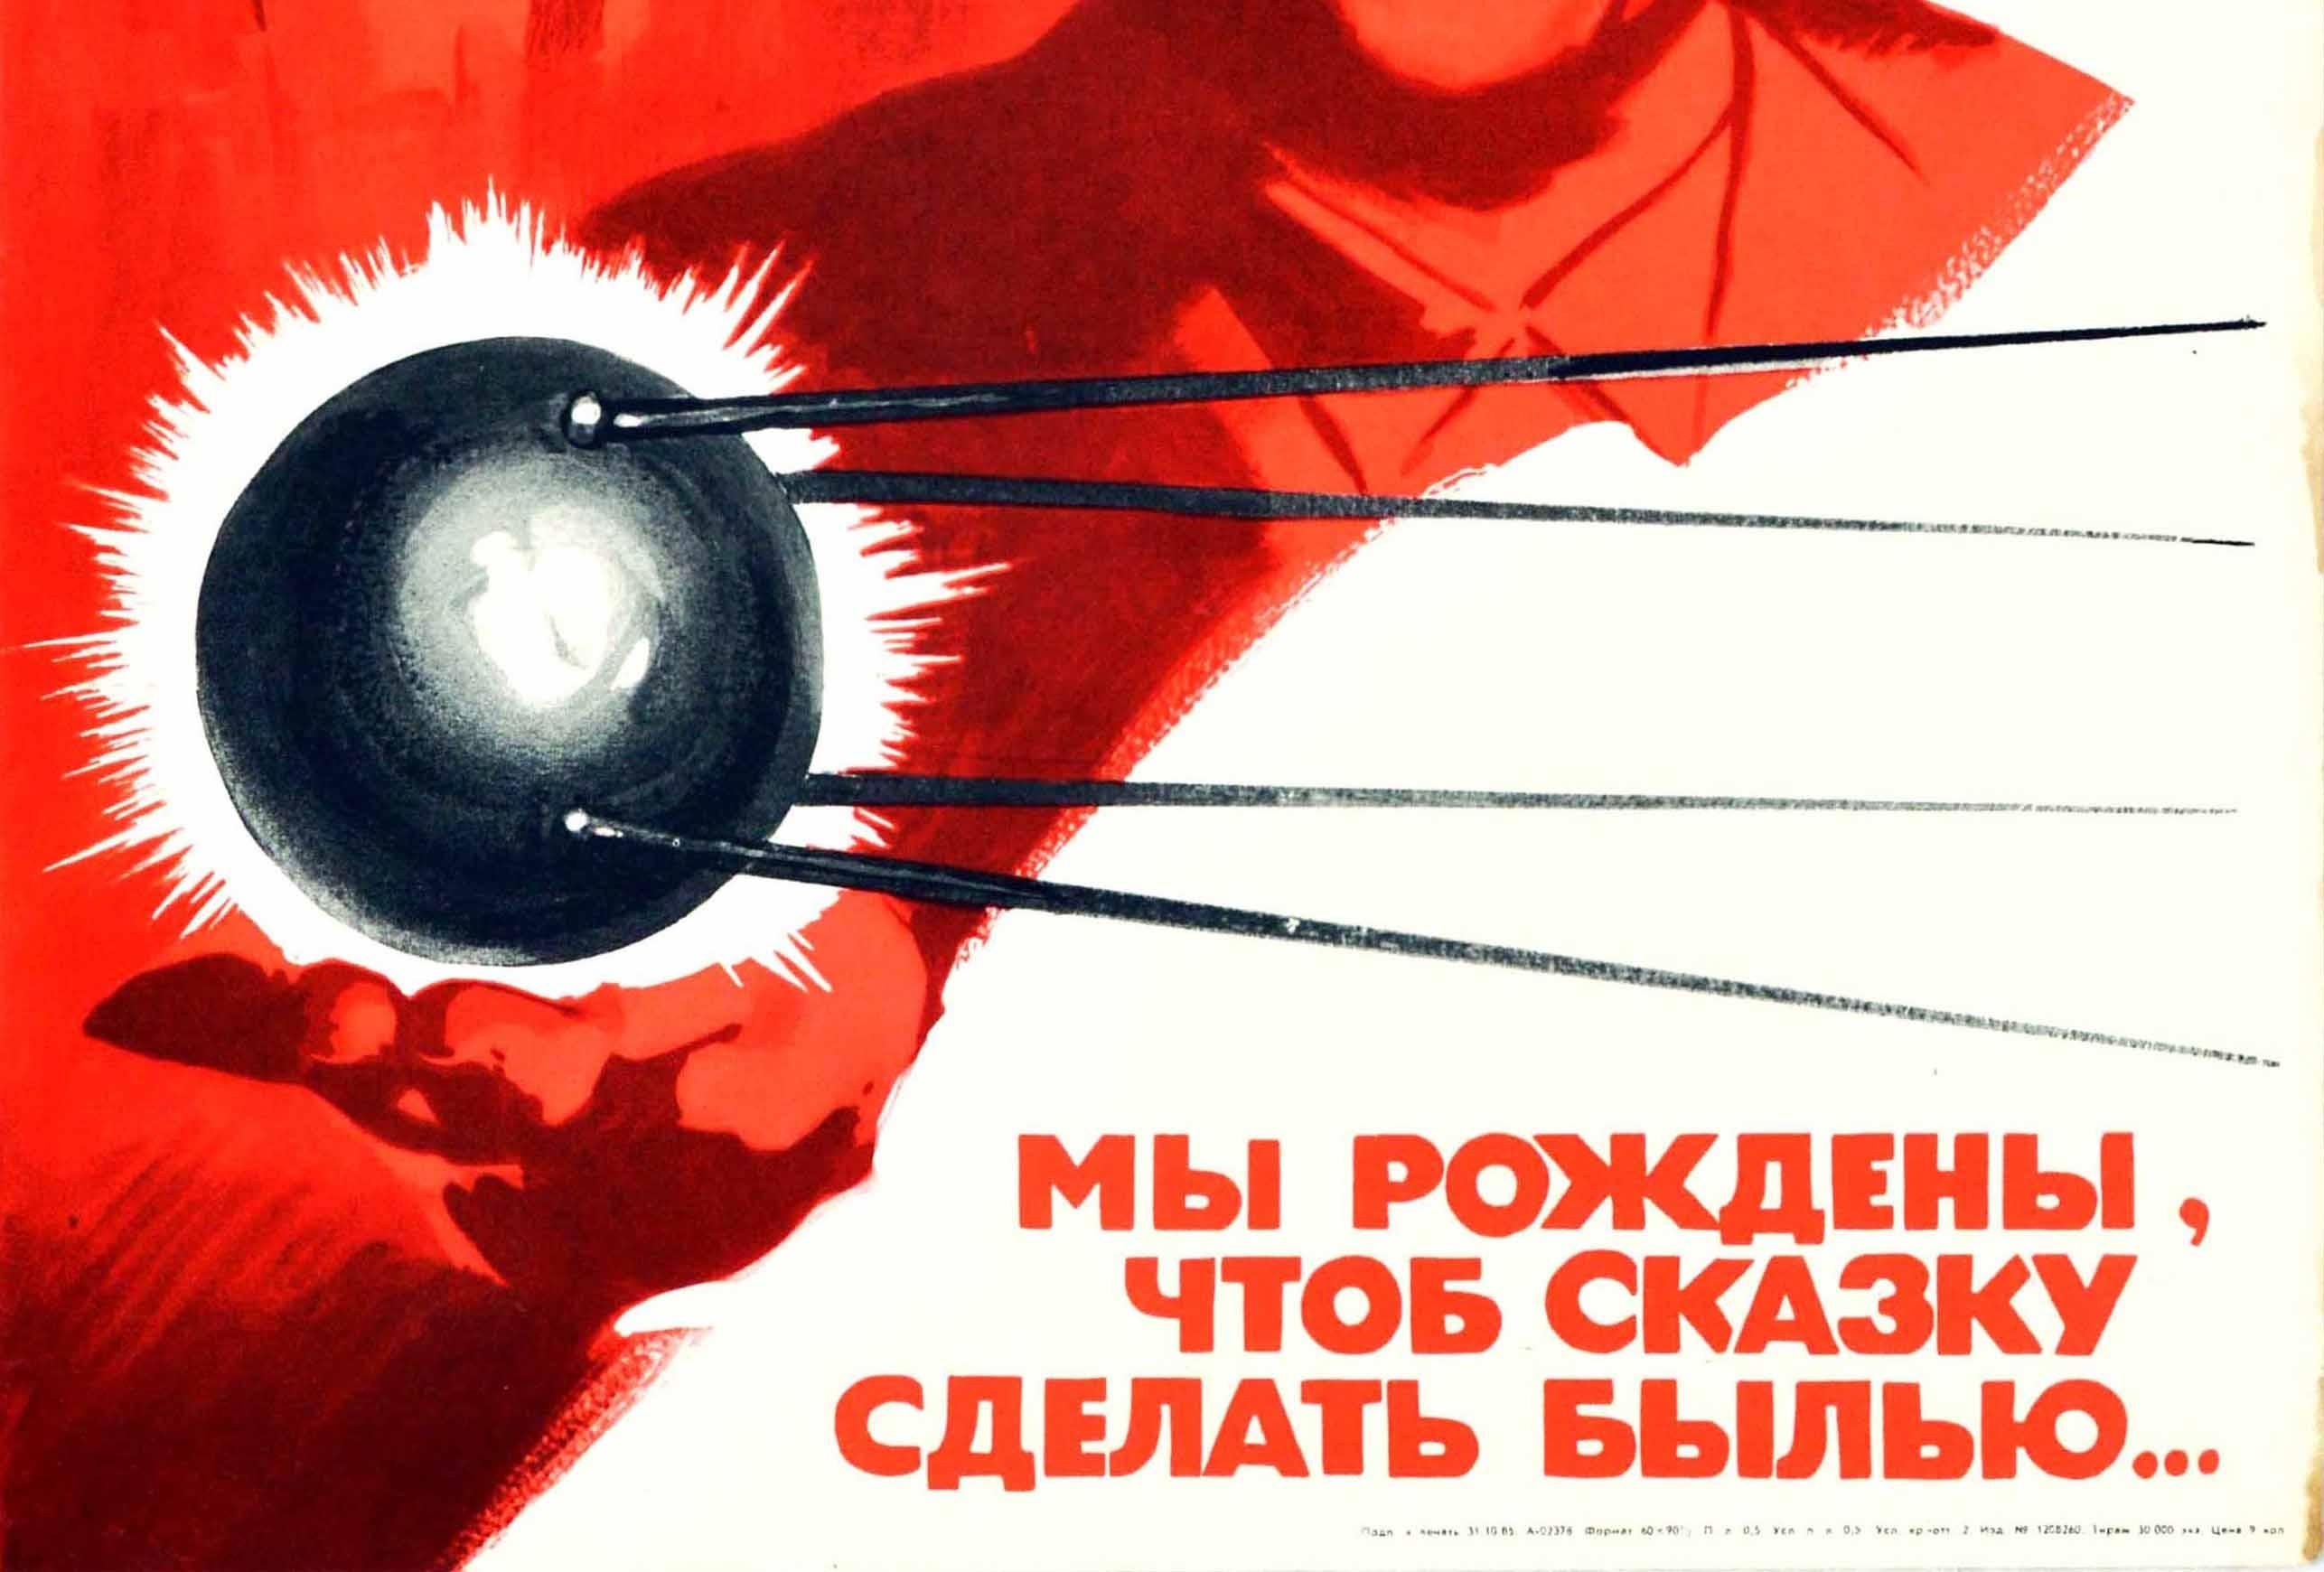 Originales sowjetisches Propagandaplakat Sputnik, Raumfahrt, Rote Armee, Soldat UdSSR im Angebot 1